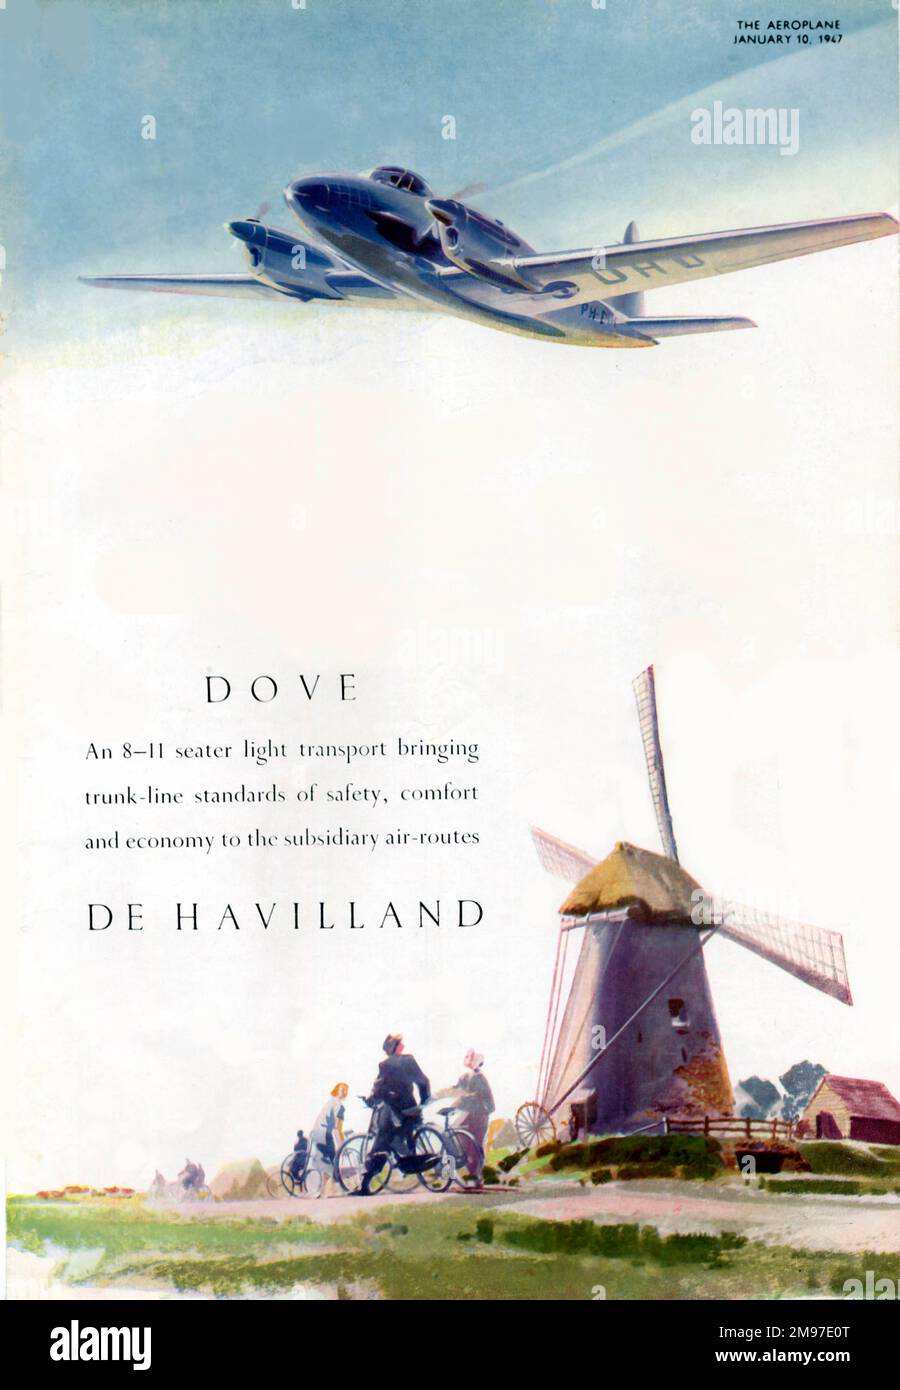 Adverts-De Havilland Dove. Stock Photo